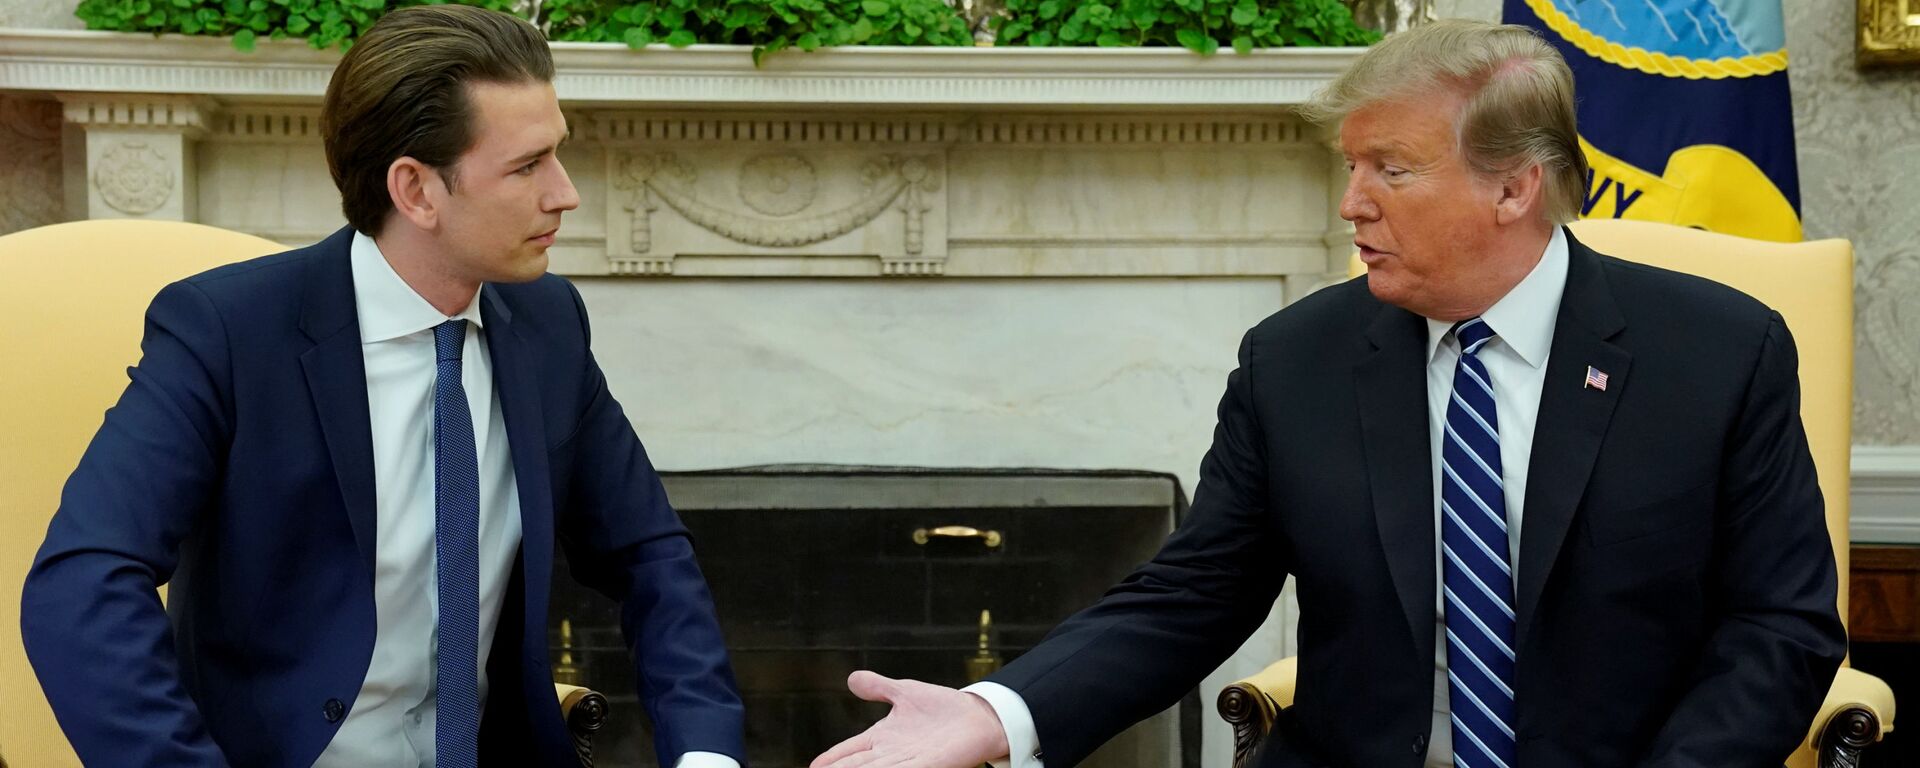 Канцлер Австрии Себастьян Курц и президент США Дональд Трамп - Sputnik Латвия, 1920, 23.02.2019